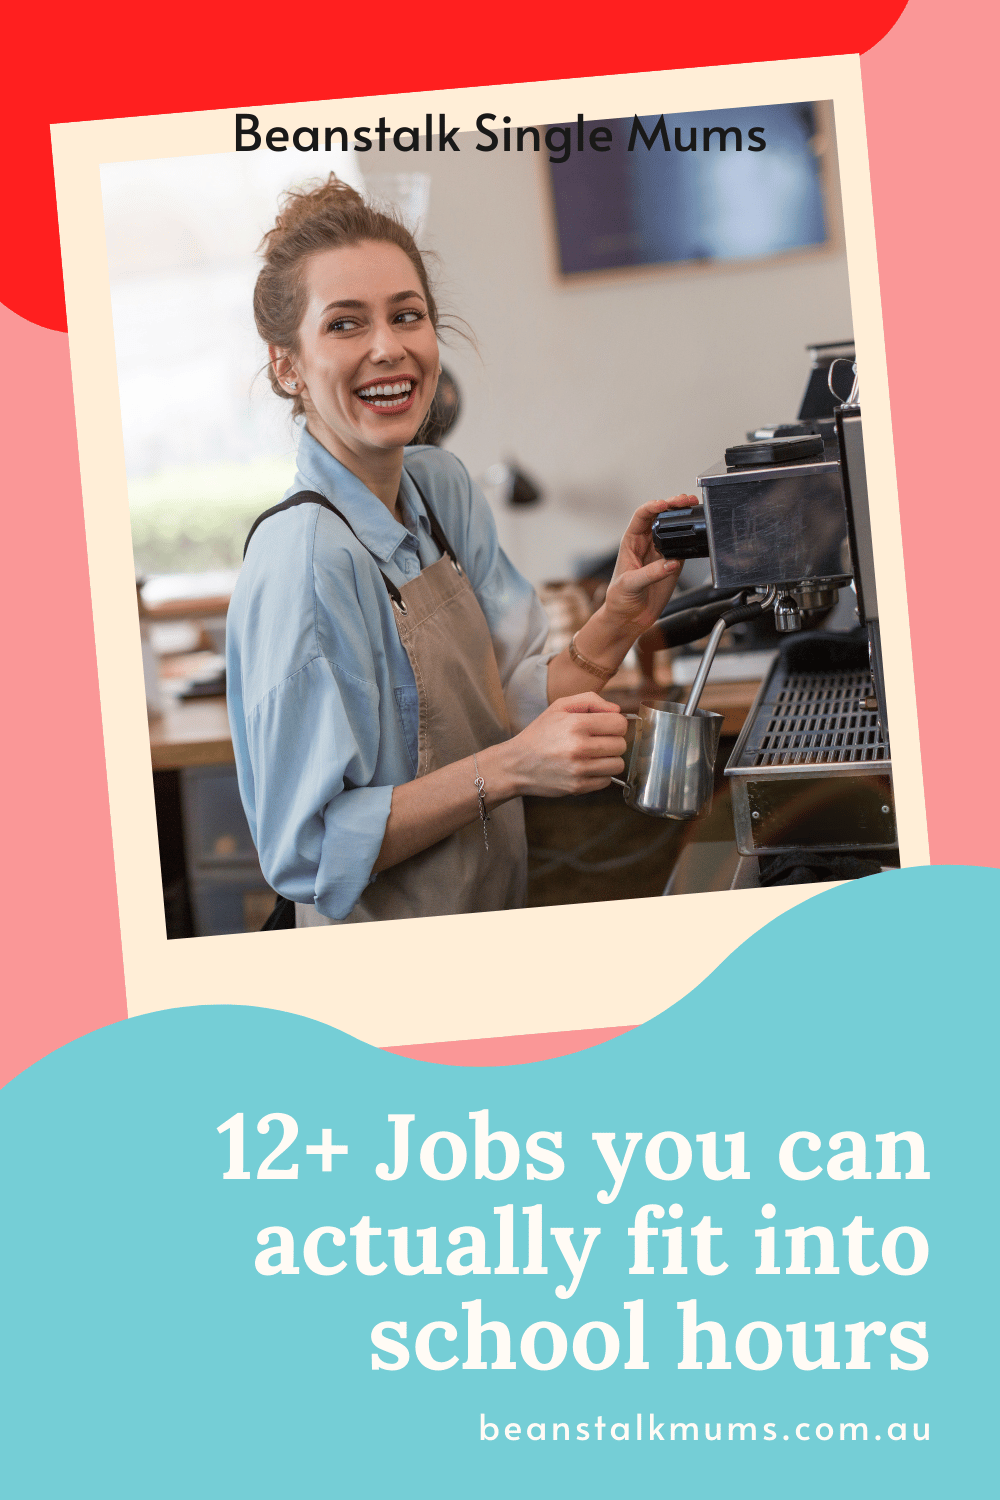 Jobs that fit into school hours | Beanstalk Single Mums Pinterest